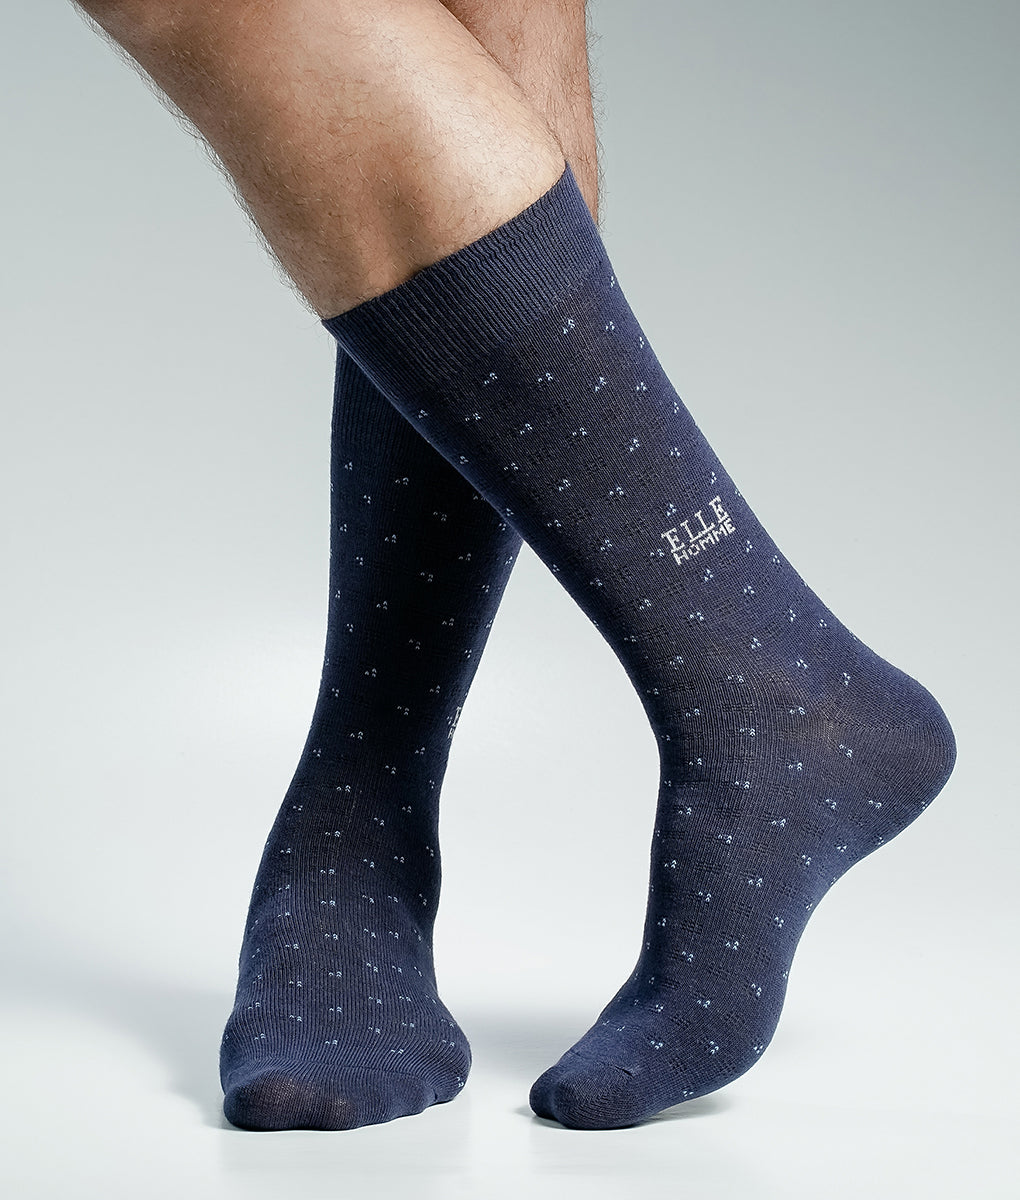 Action Long Socks for Men by MB Hosiery